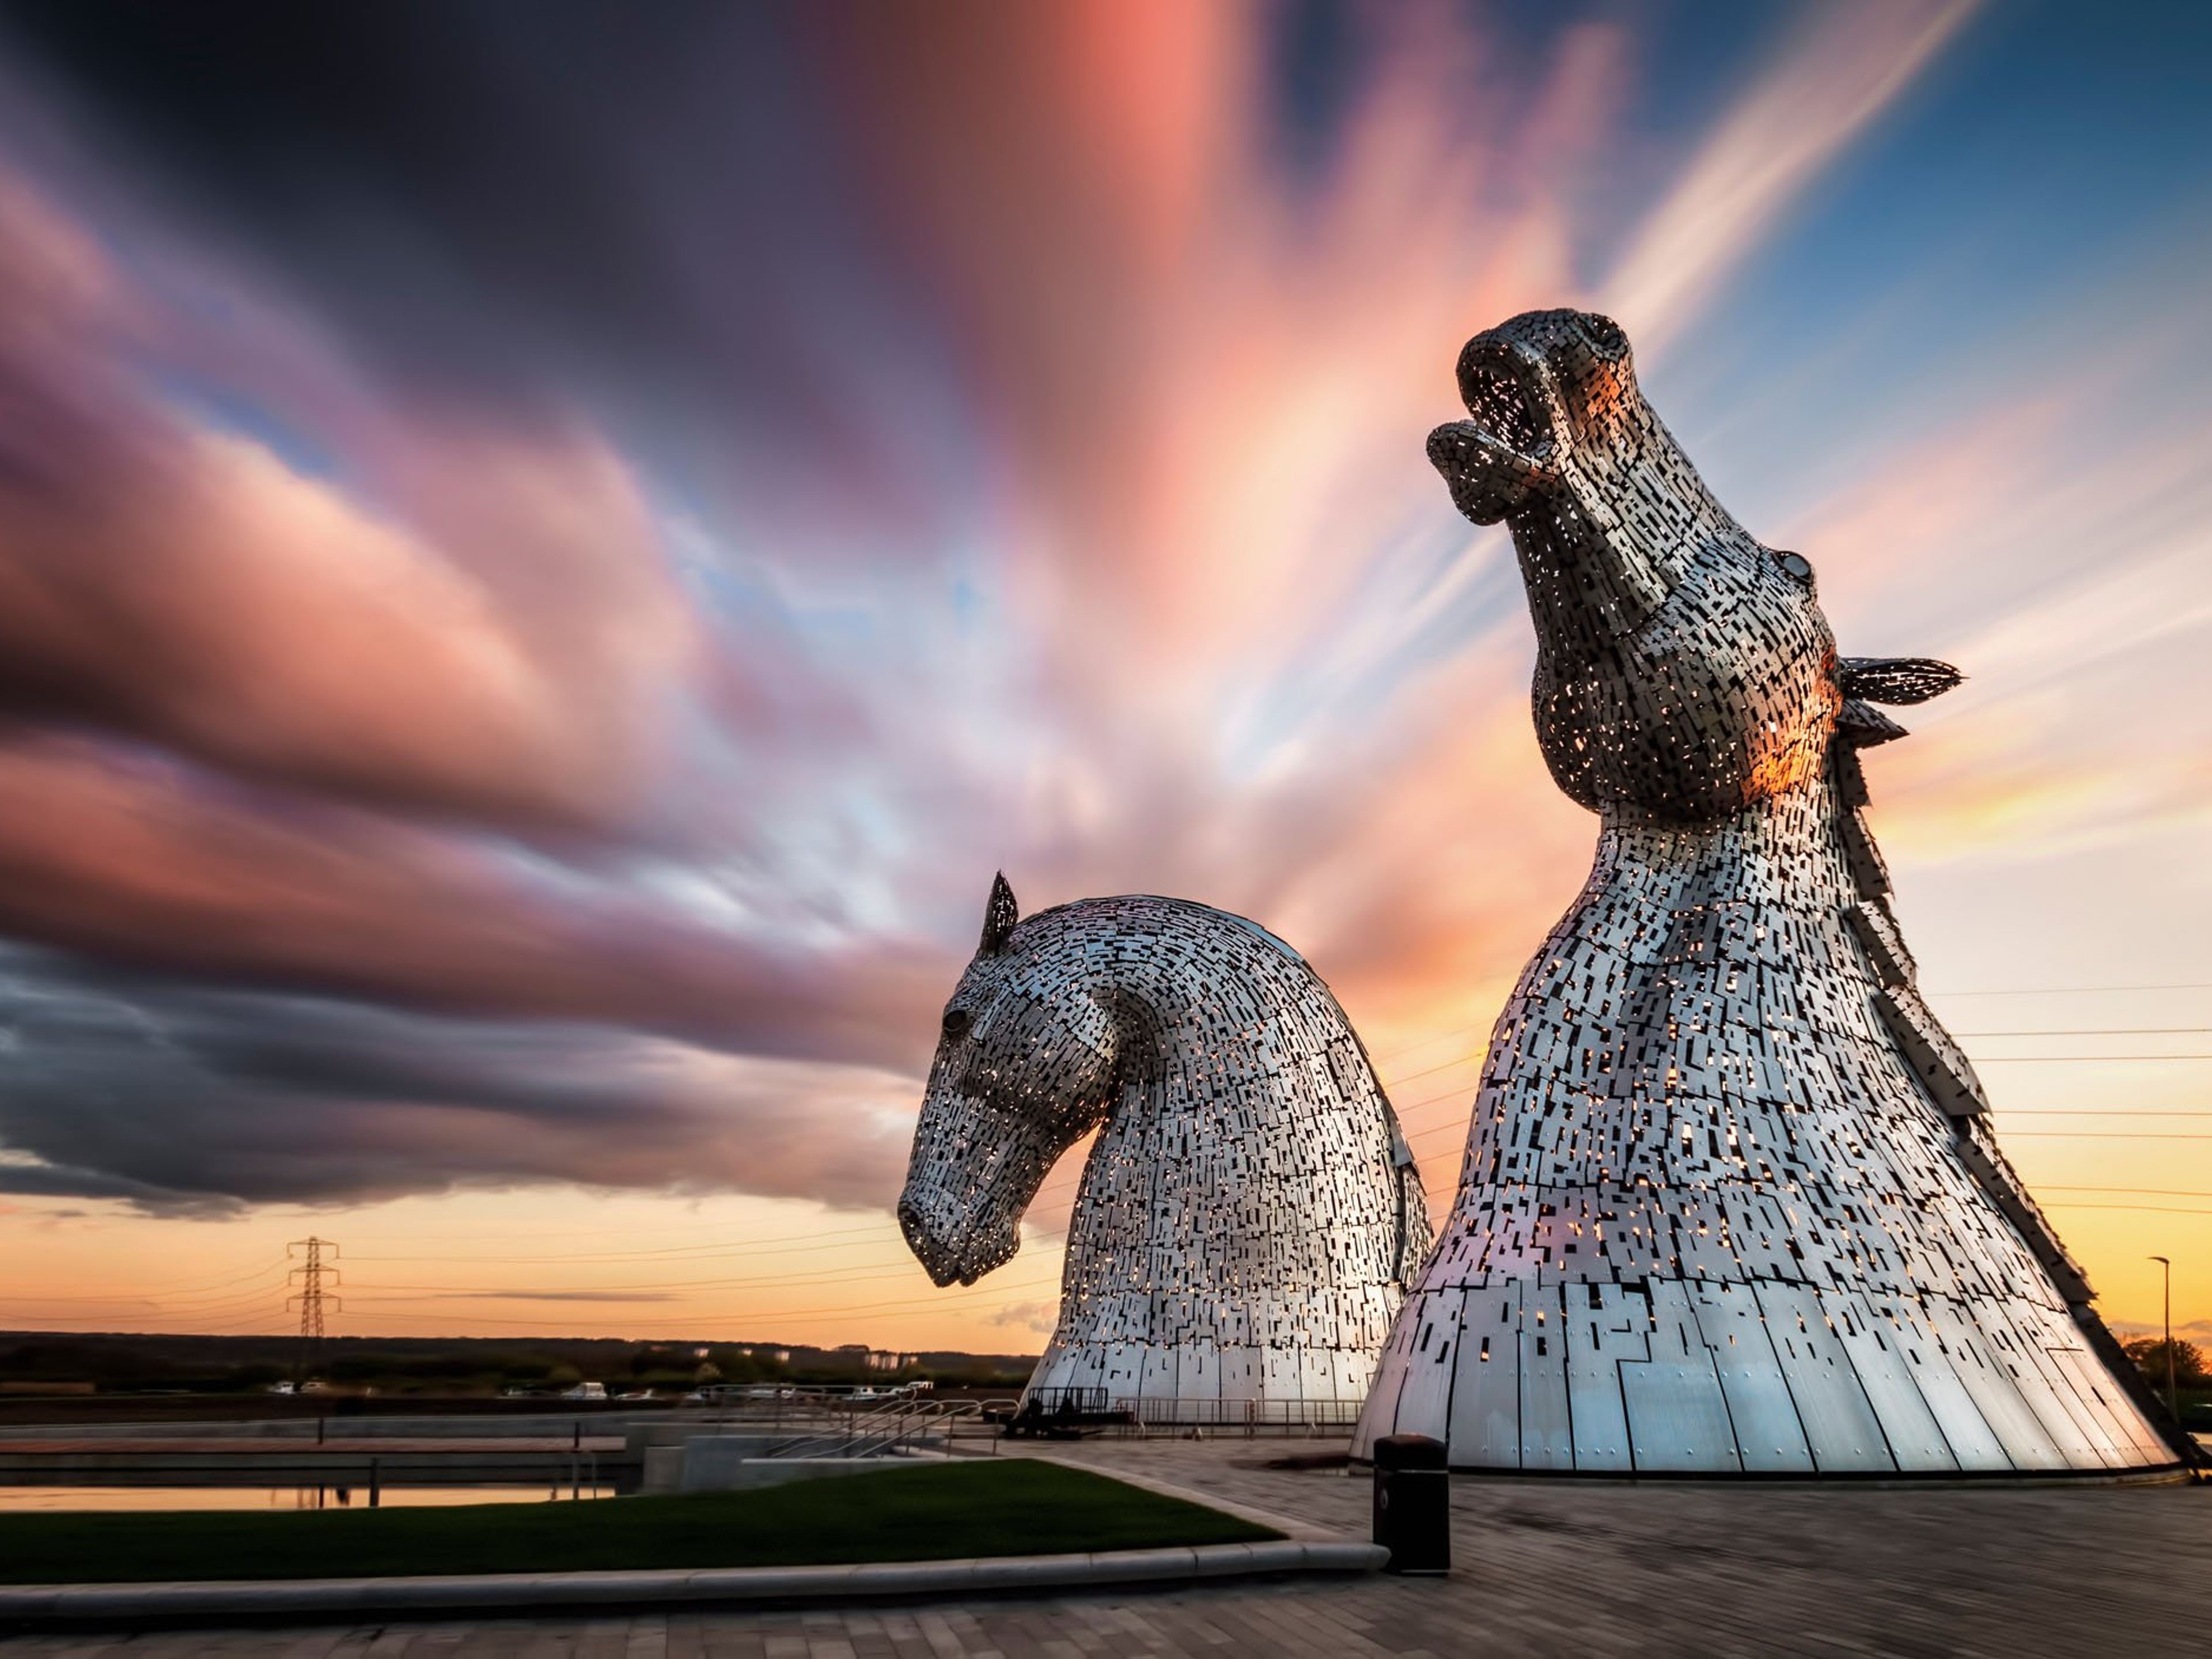 The Kelpies sculptures in Falkirk, Scotland in the evening.